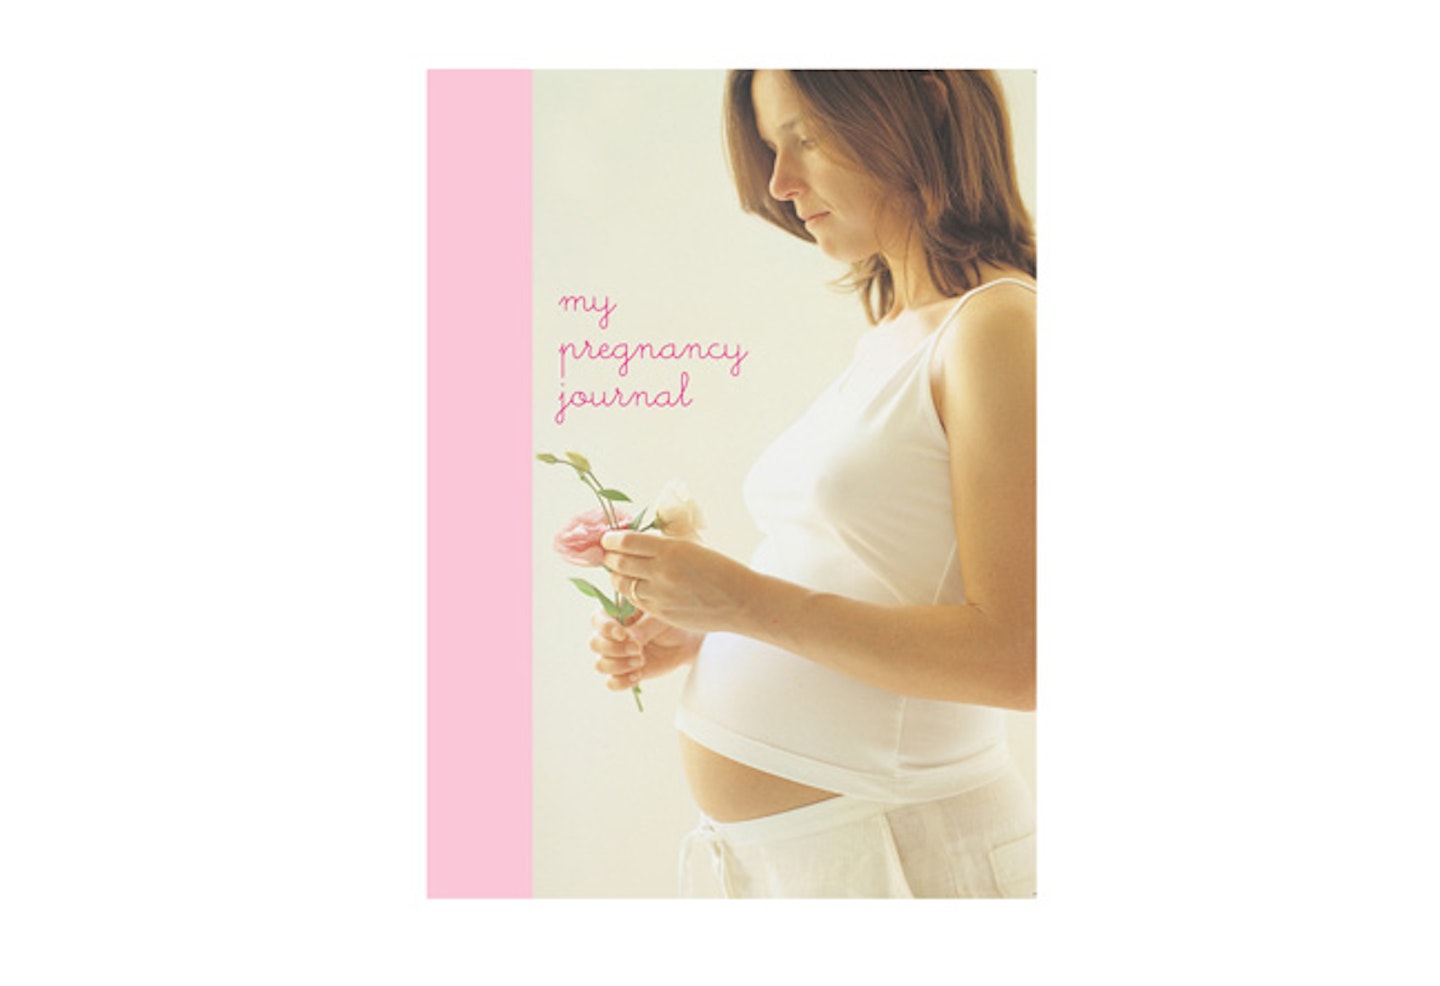 Pregnancy journal, £14.99, <a title="http://www.rylandpeters.com/" href="http://www.rylandpeters.com/" target="_blank">rylandpeters.com</a>